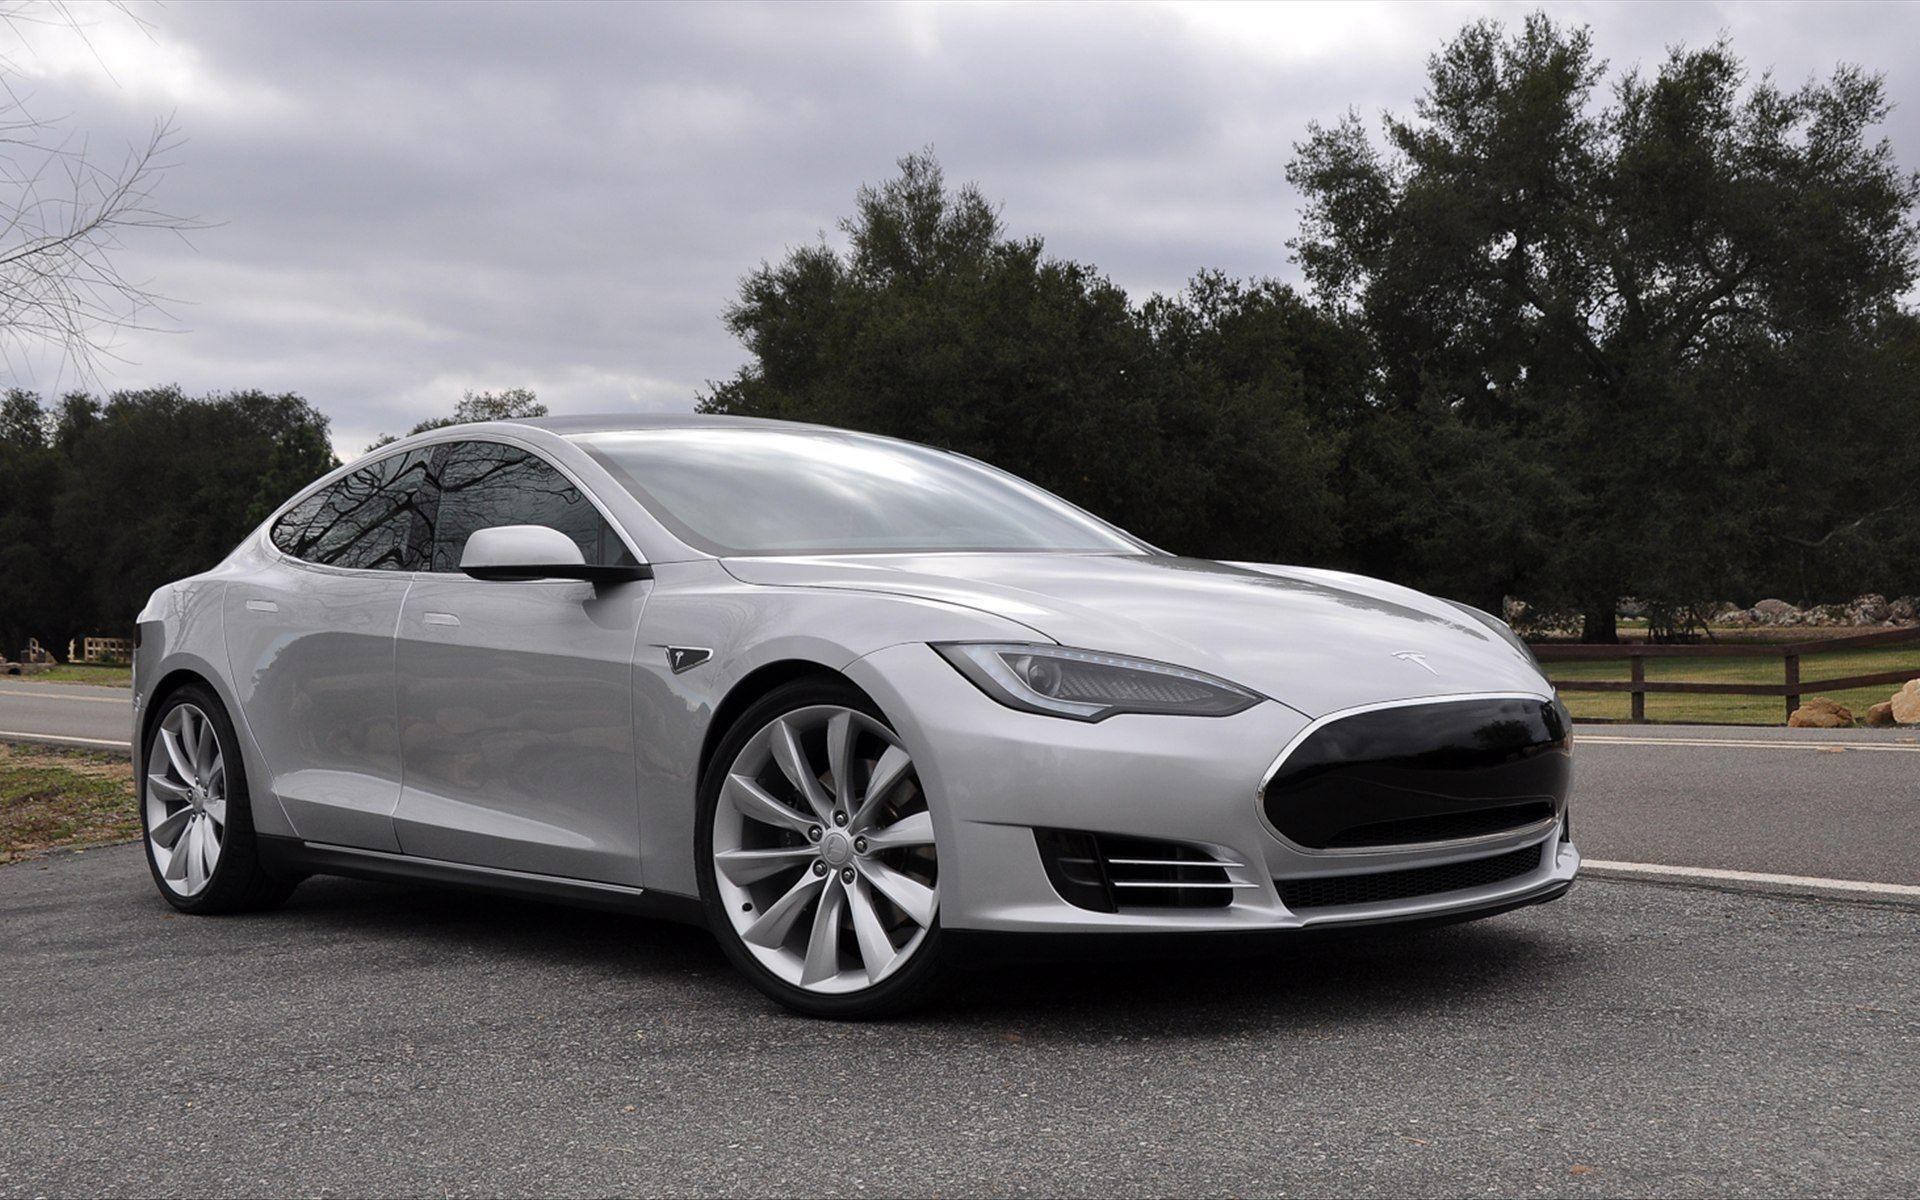 New 2015 Tesla Model S Wallpaper, Download Free HD Wallpaper